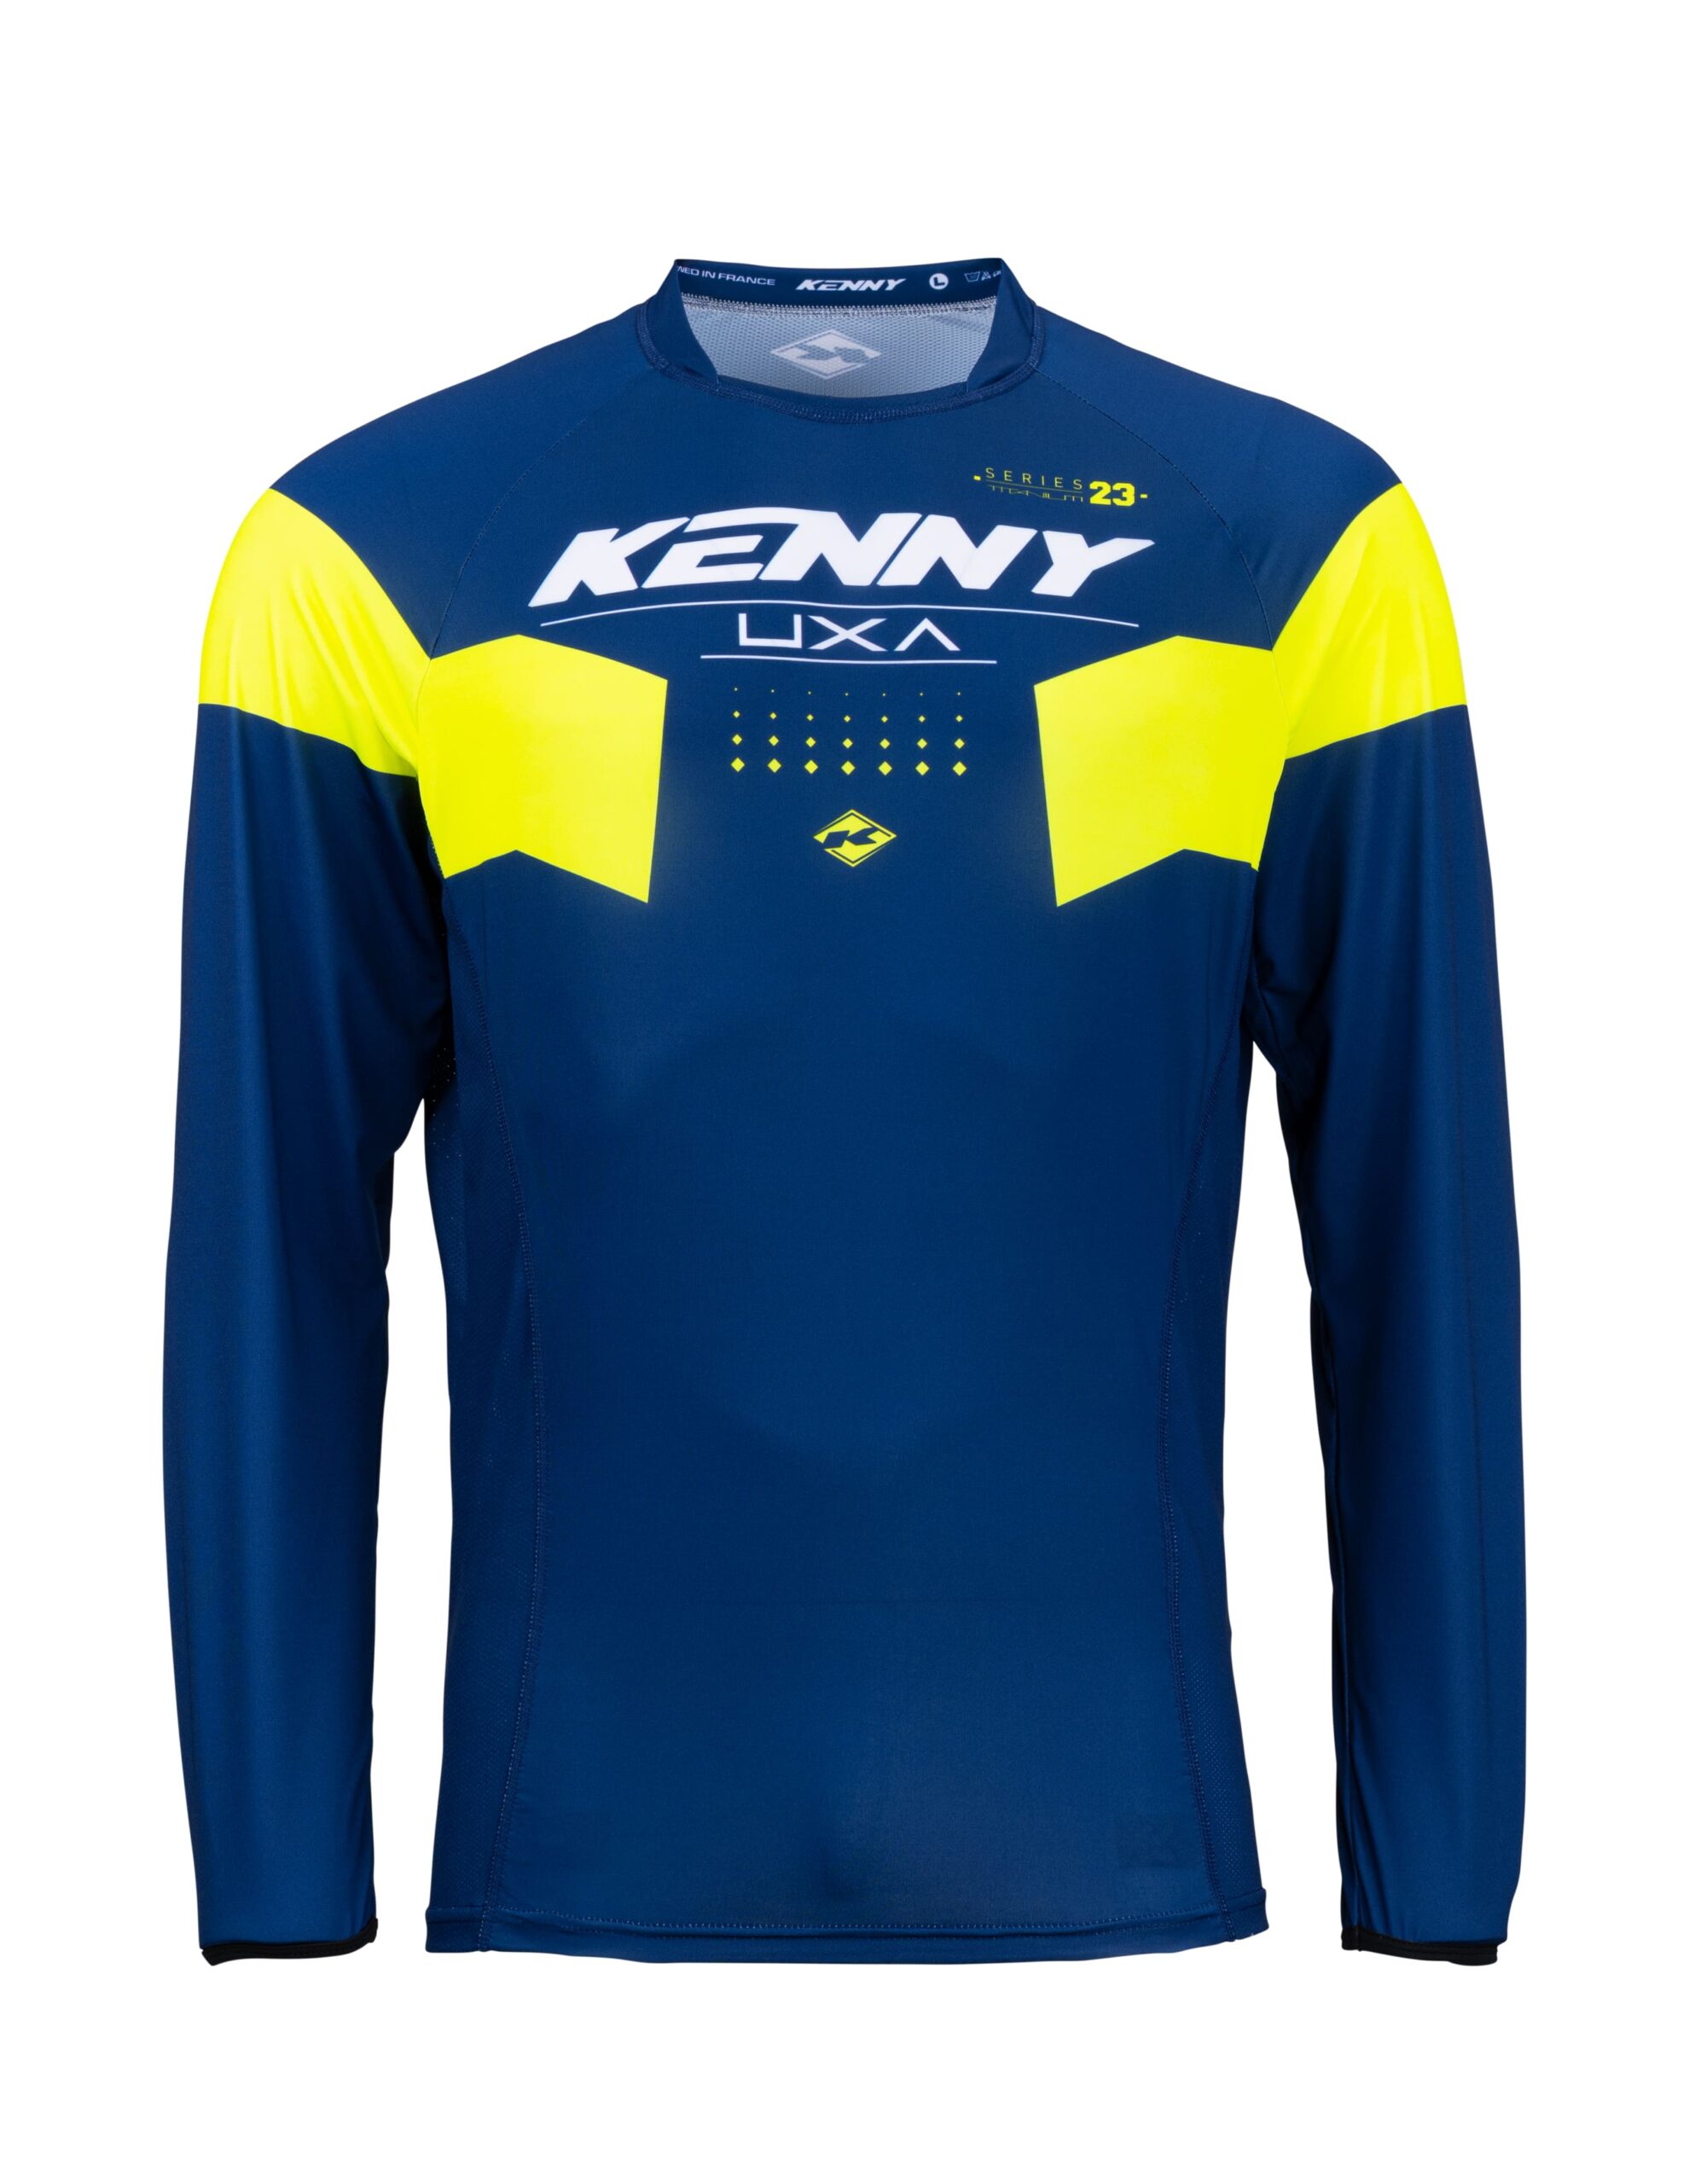 maillot_motocross_kenny_titanium_solid_navy (10)